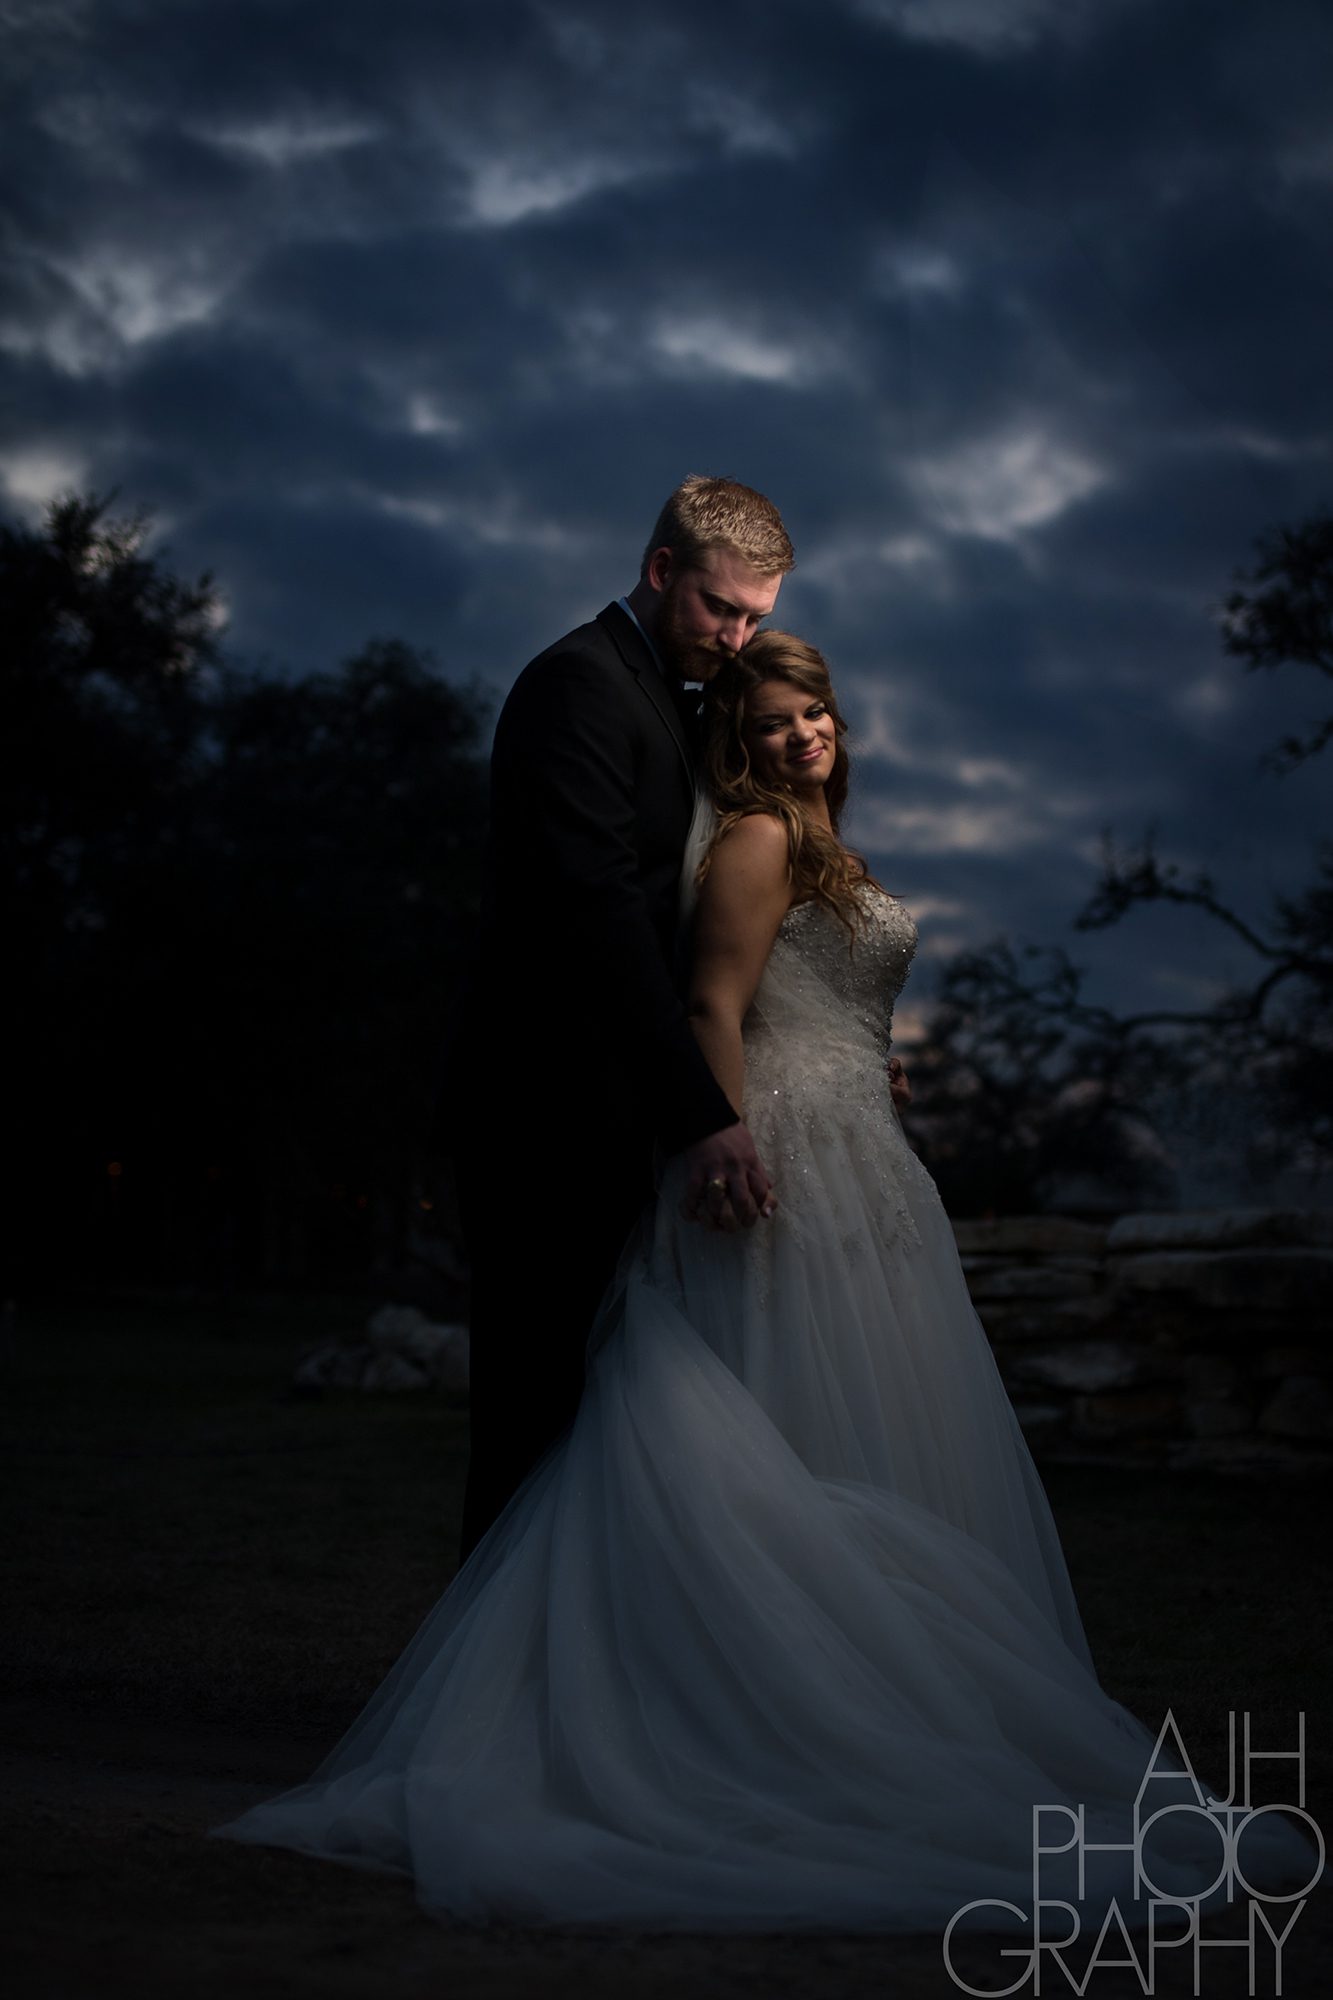 Memory Lane Wedding - AJH Photography